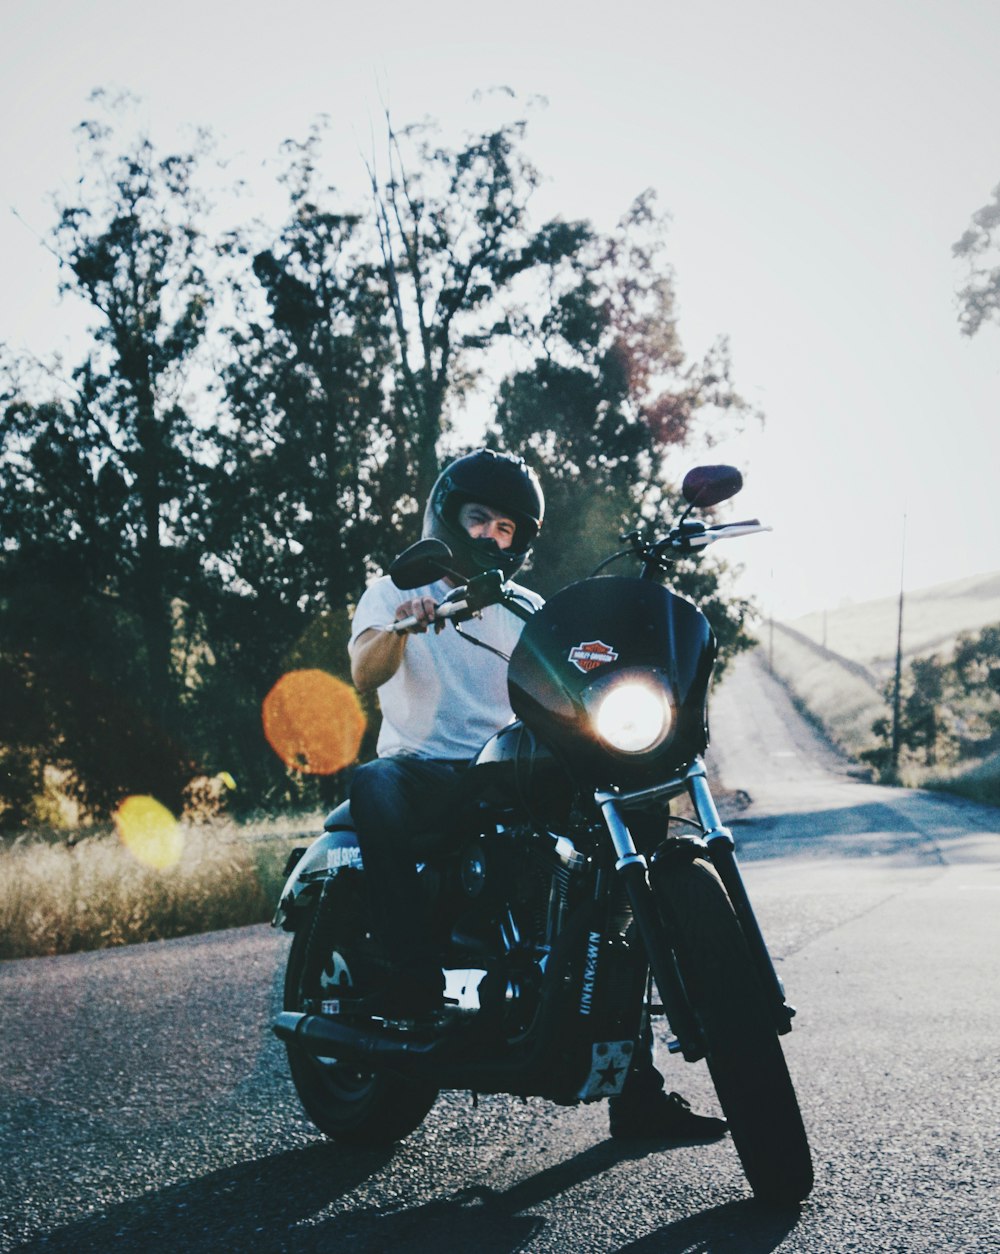 homme conduisant une moto